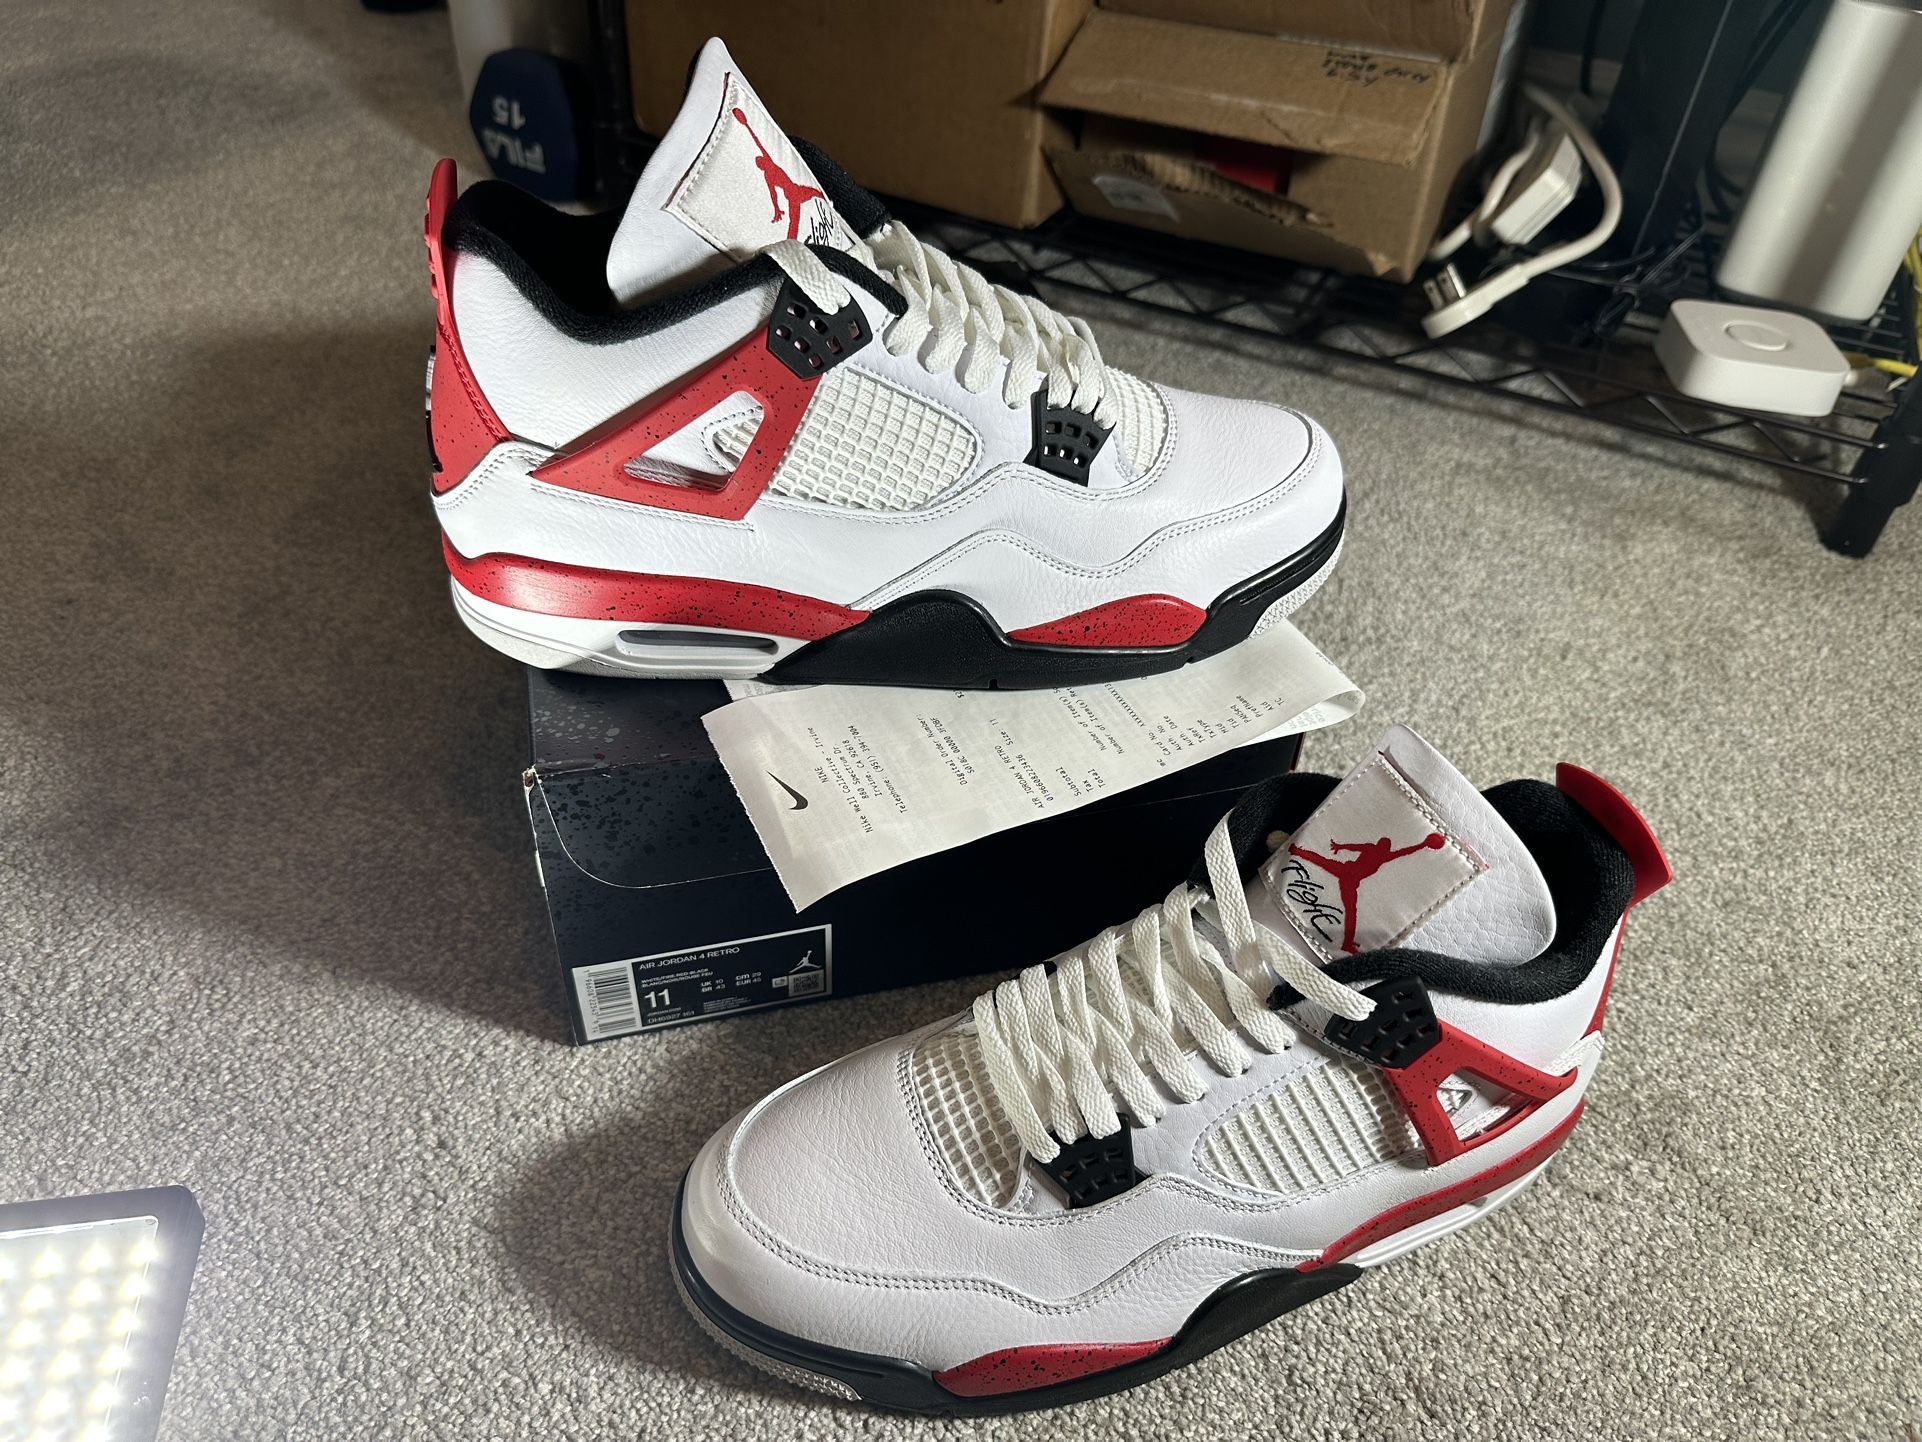 Nike Jordan 4 Red Cement Sz 11